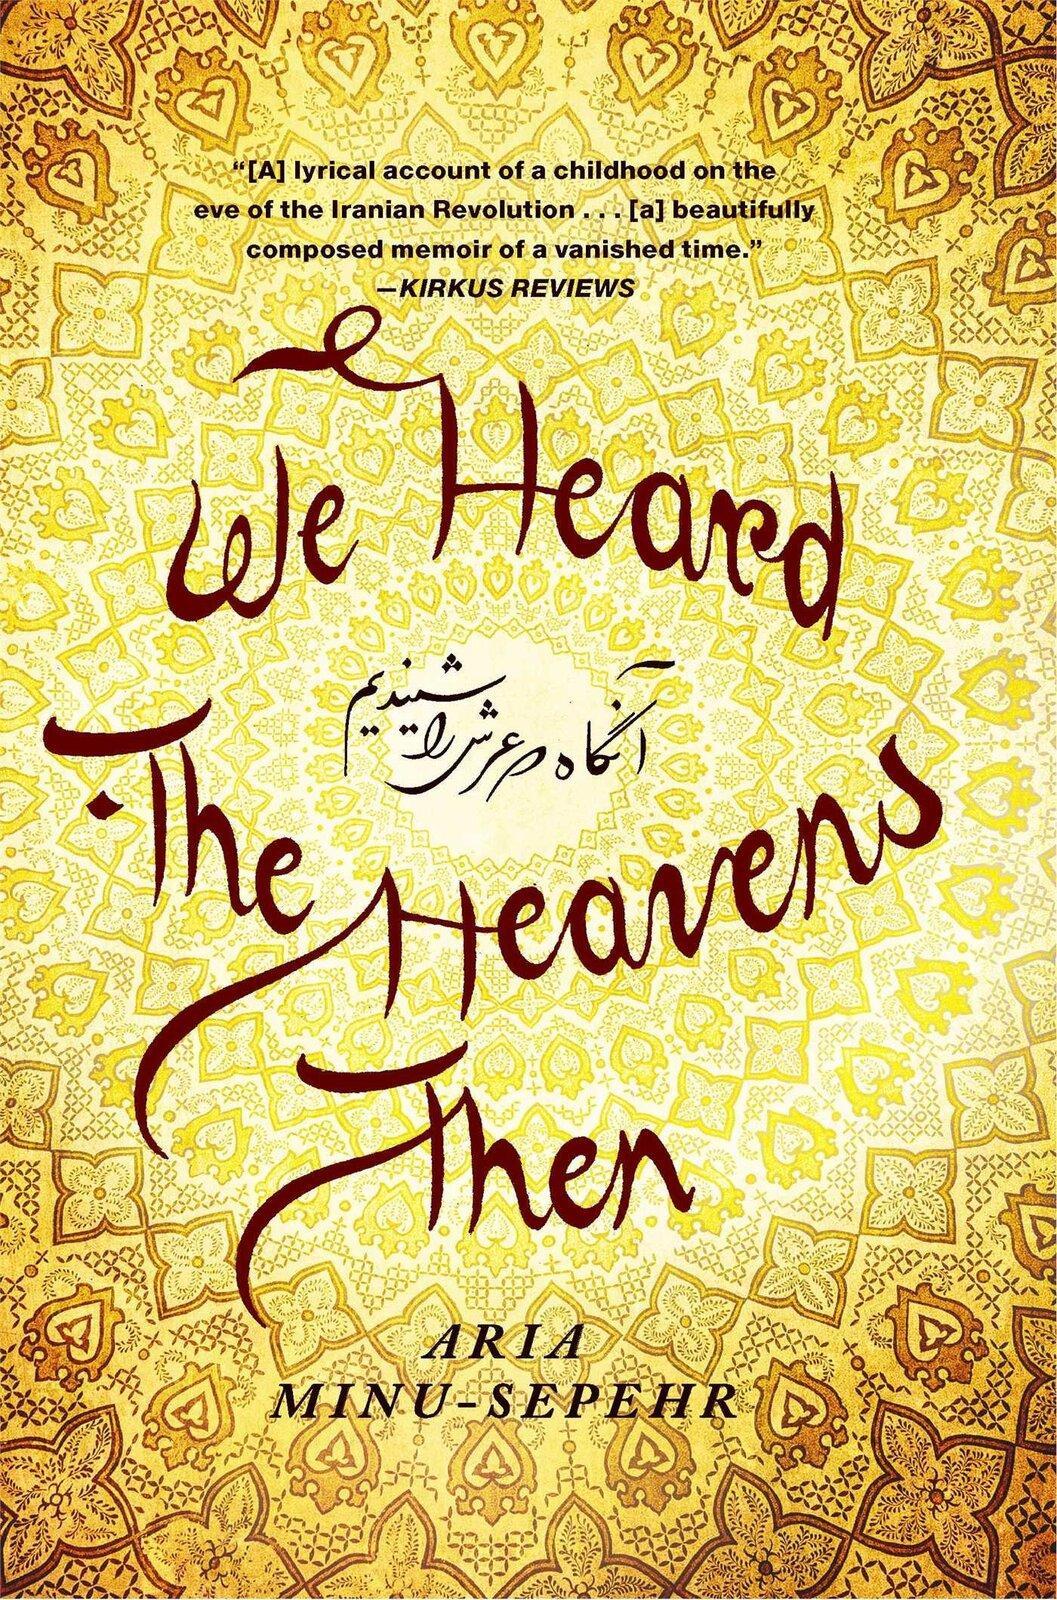 We Heard the Heavens Then: A Memoir of Iran Aria Minu-Sepehr Paperback Book